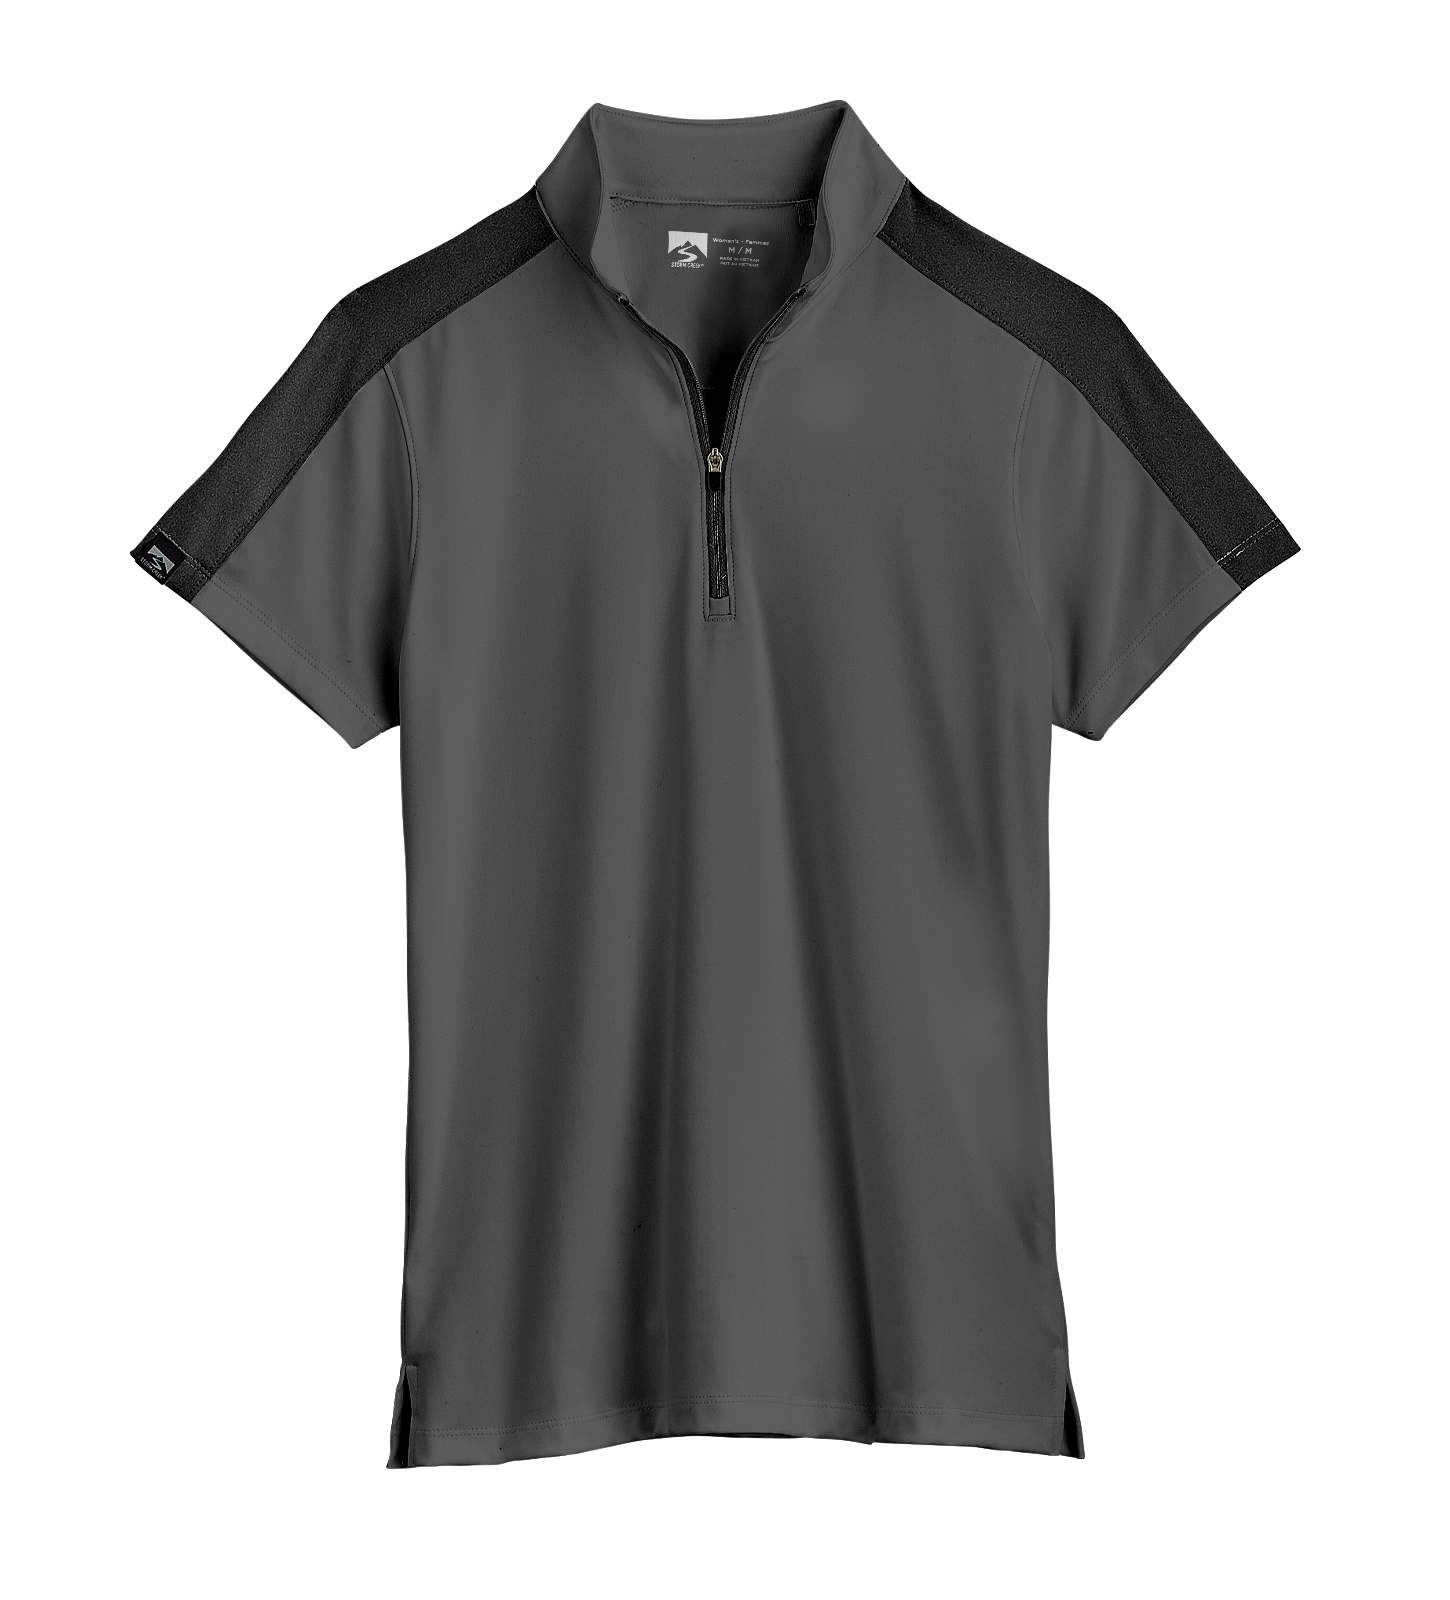 Storm Creek Activator Short-Sleeve Polo Shirt for Ladies - Dark Heather Gray/Black - M